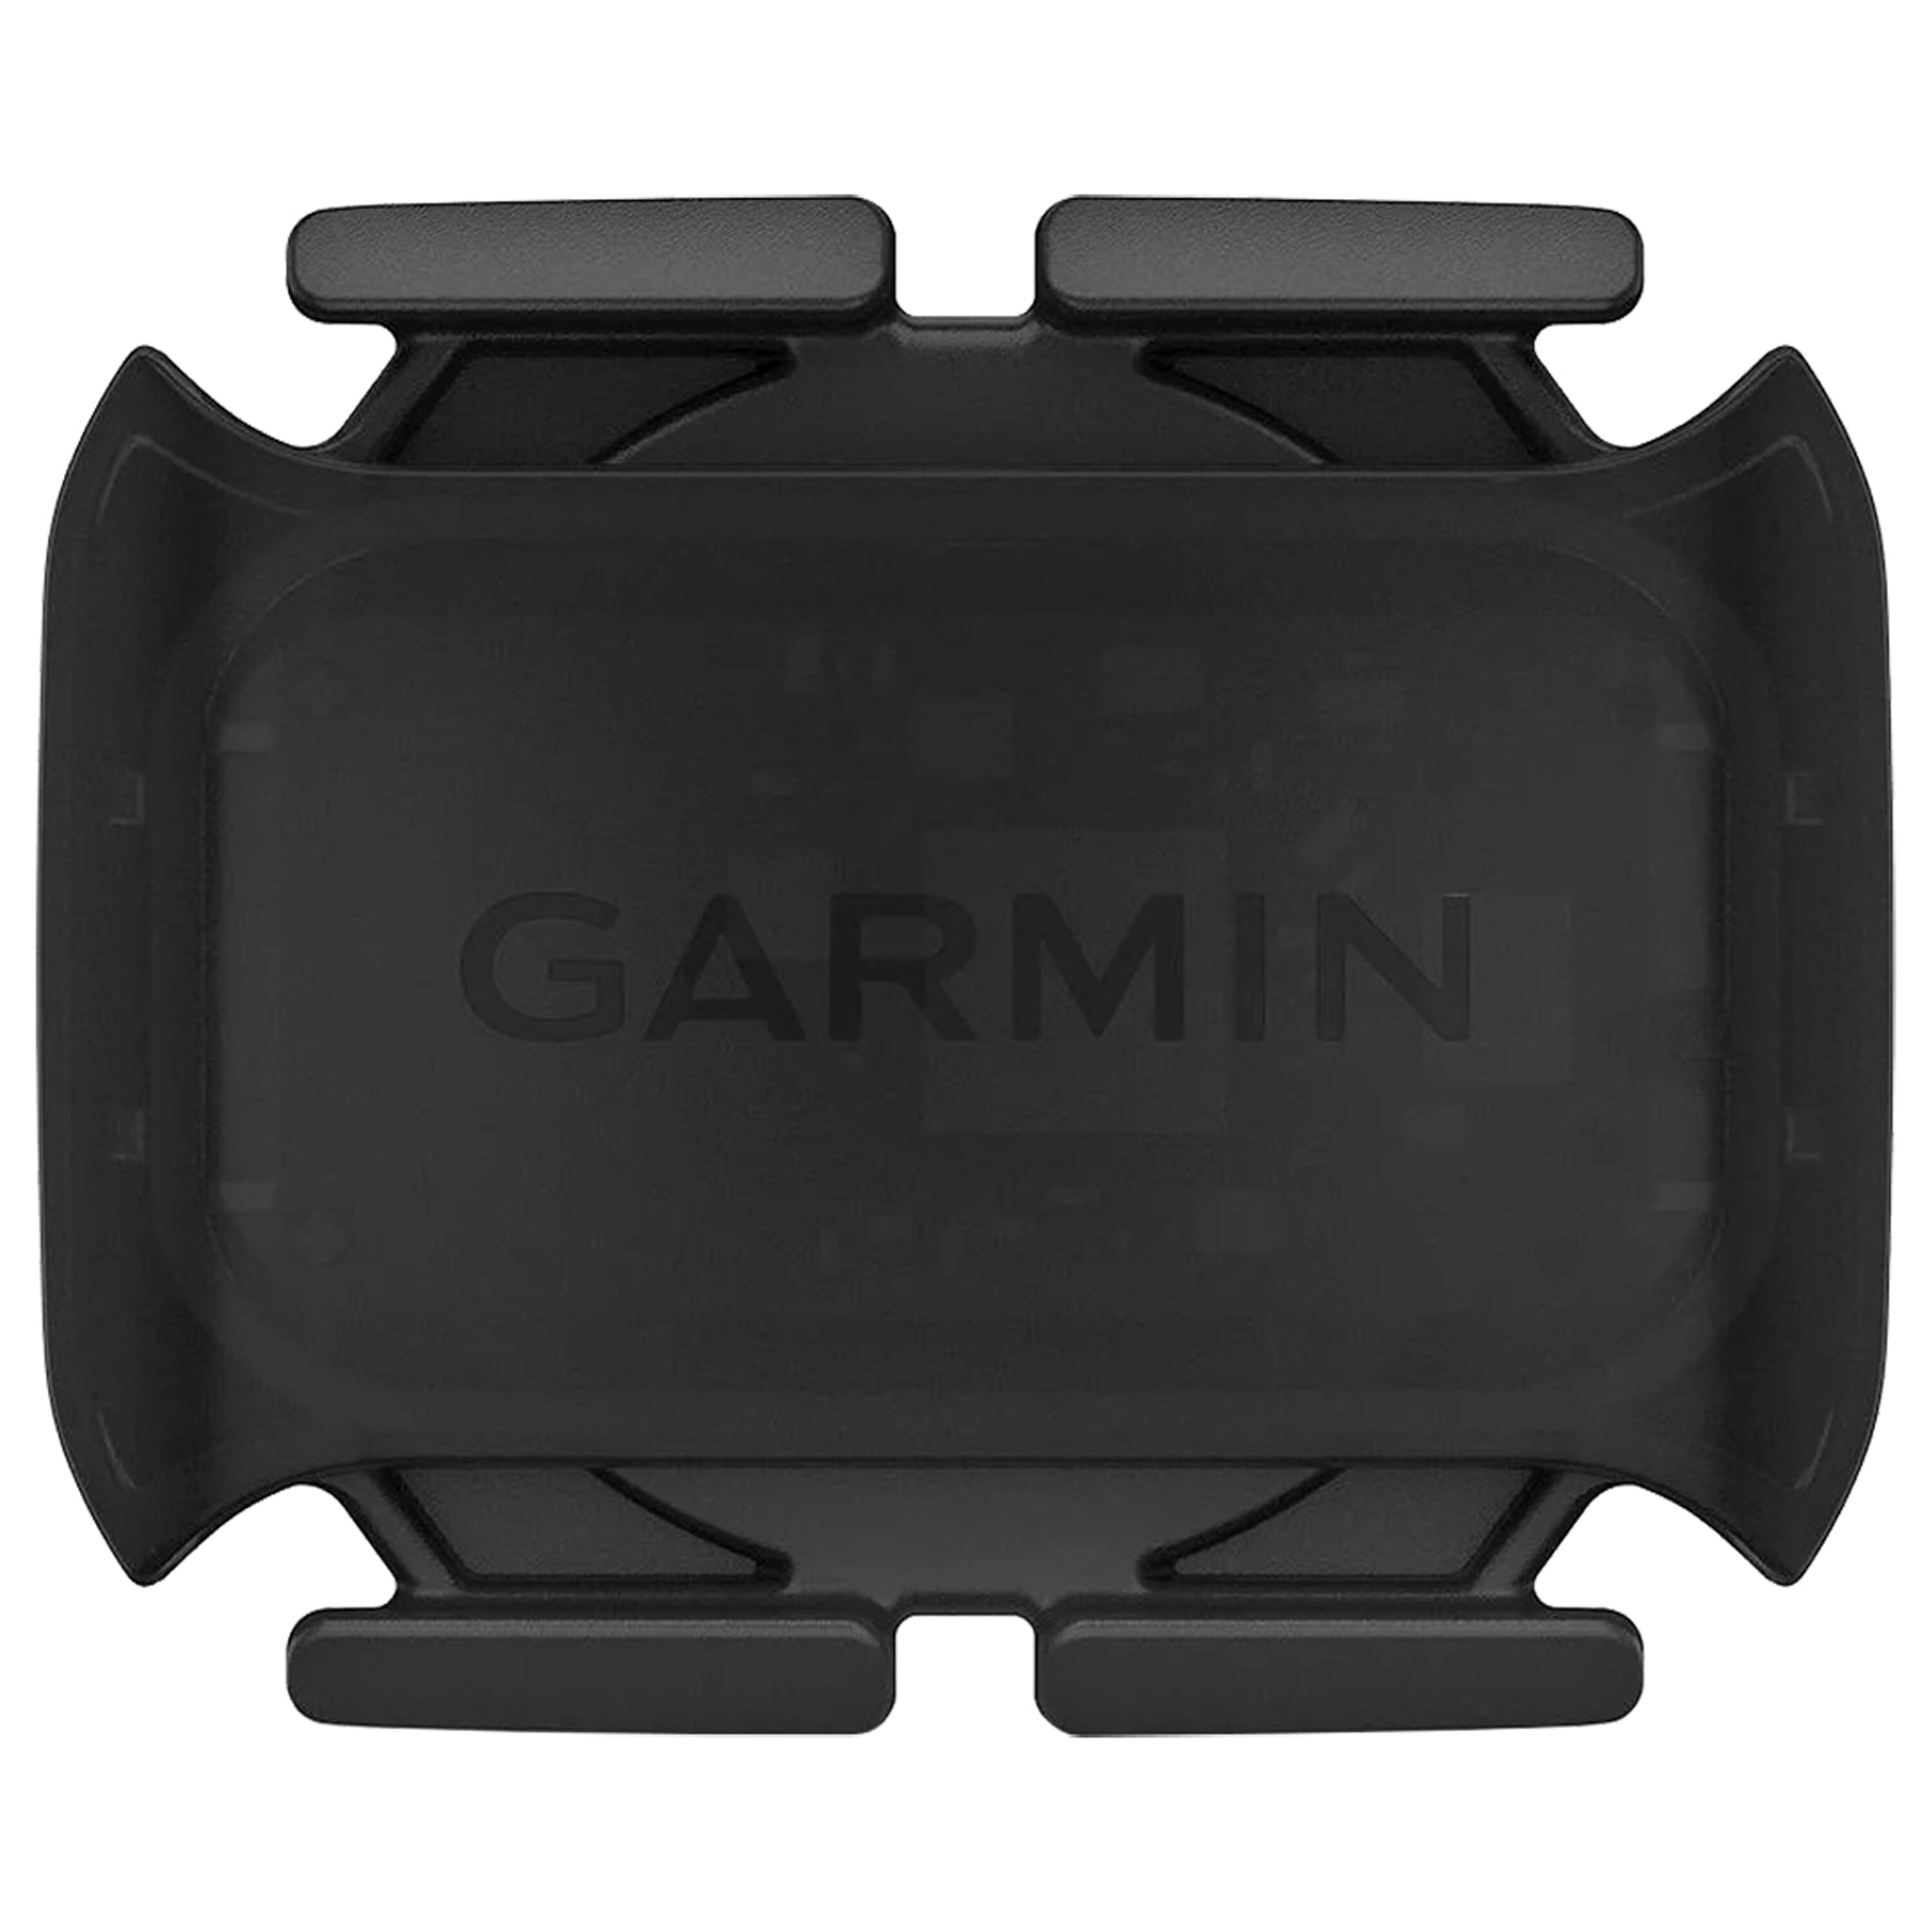 Sensore di cadenza Garmin Edge 2 Dual Ant+ Bluetooth LordGun online bike  store